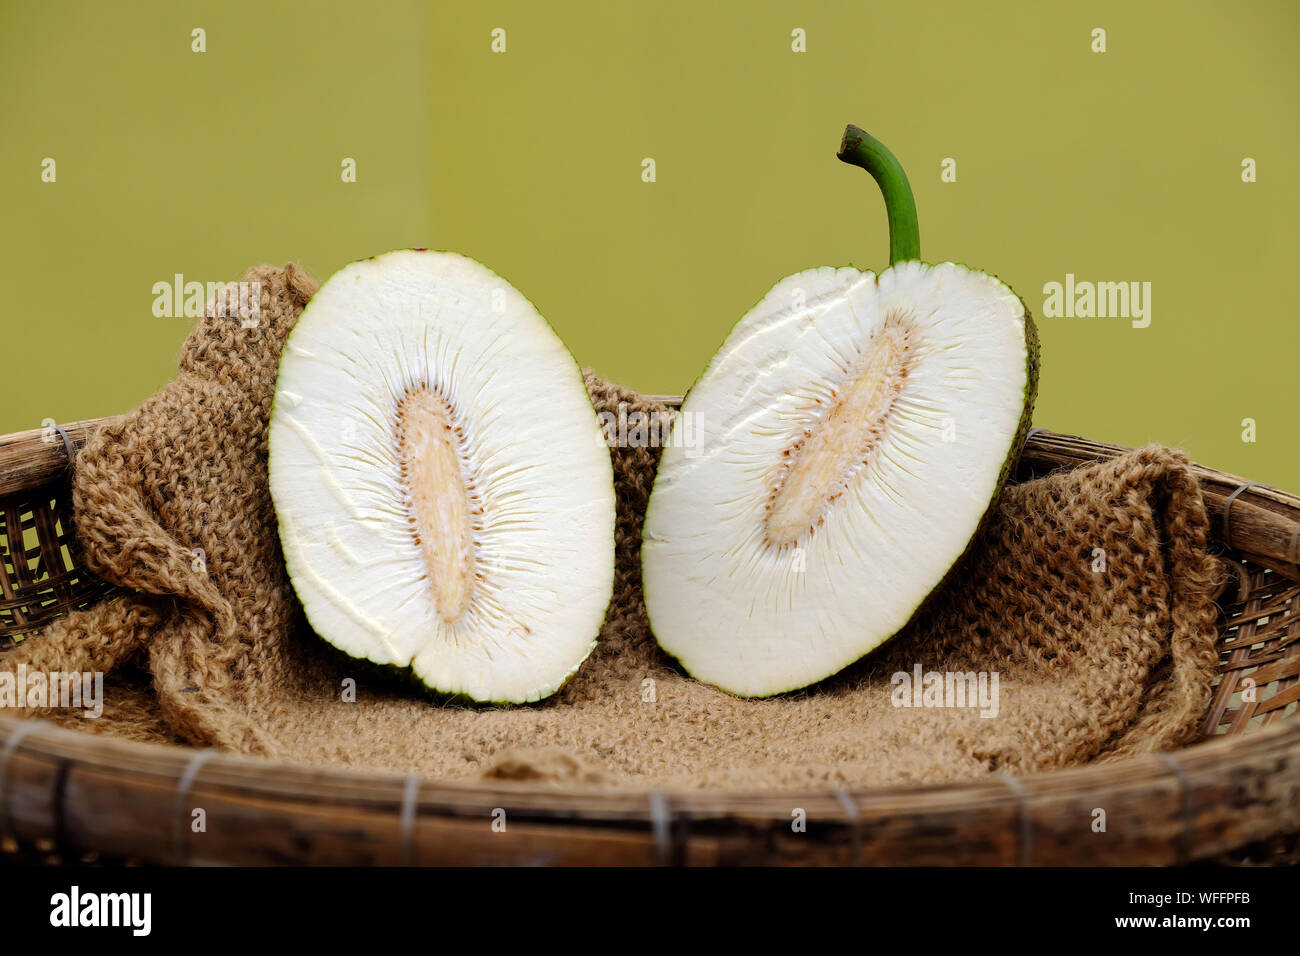 Breadfruit cut in half on burlap in bamboo basket on yellow background, Vietnamese healthy vegetarian dish Stock Photo